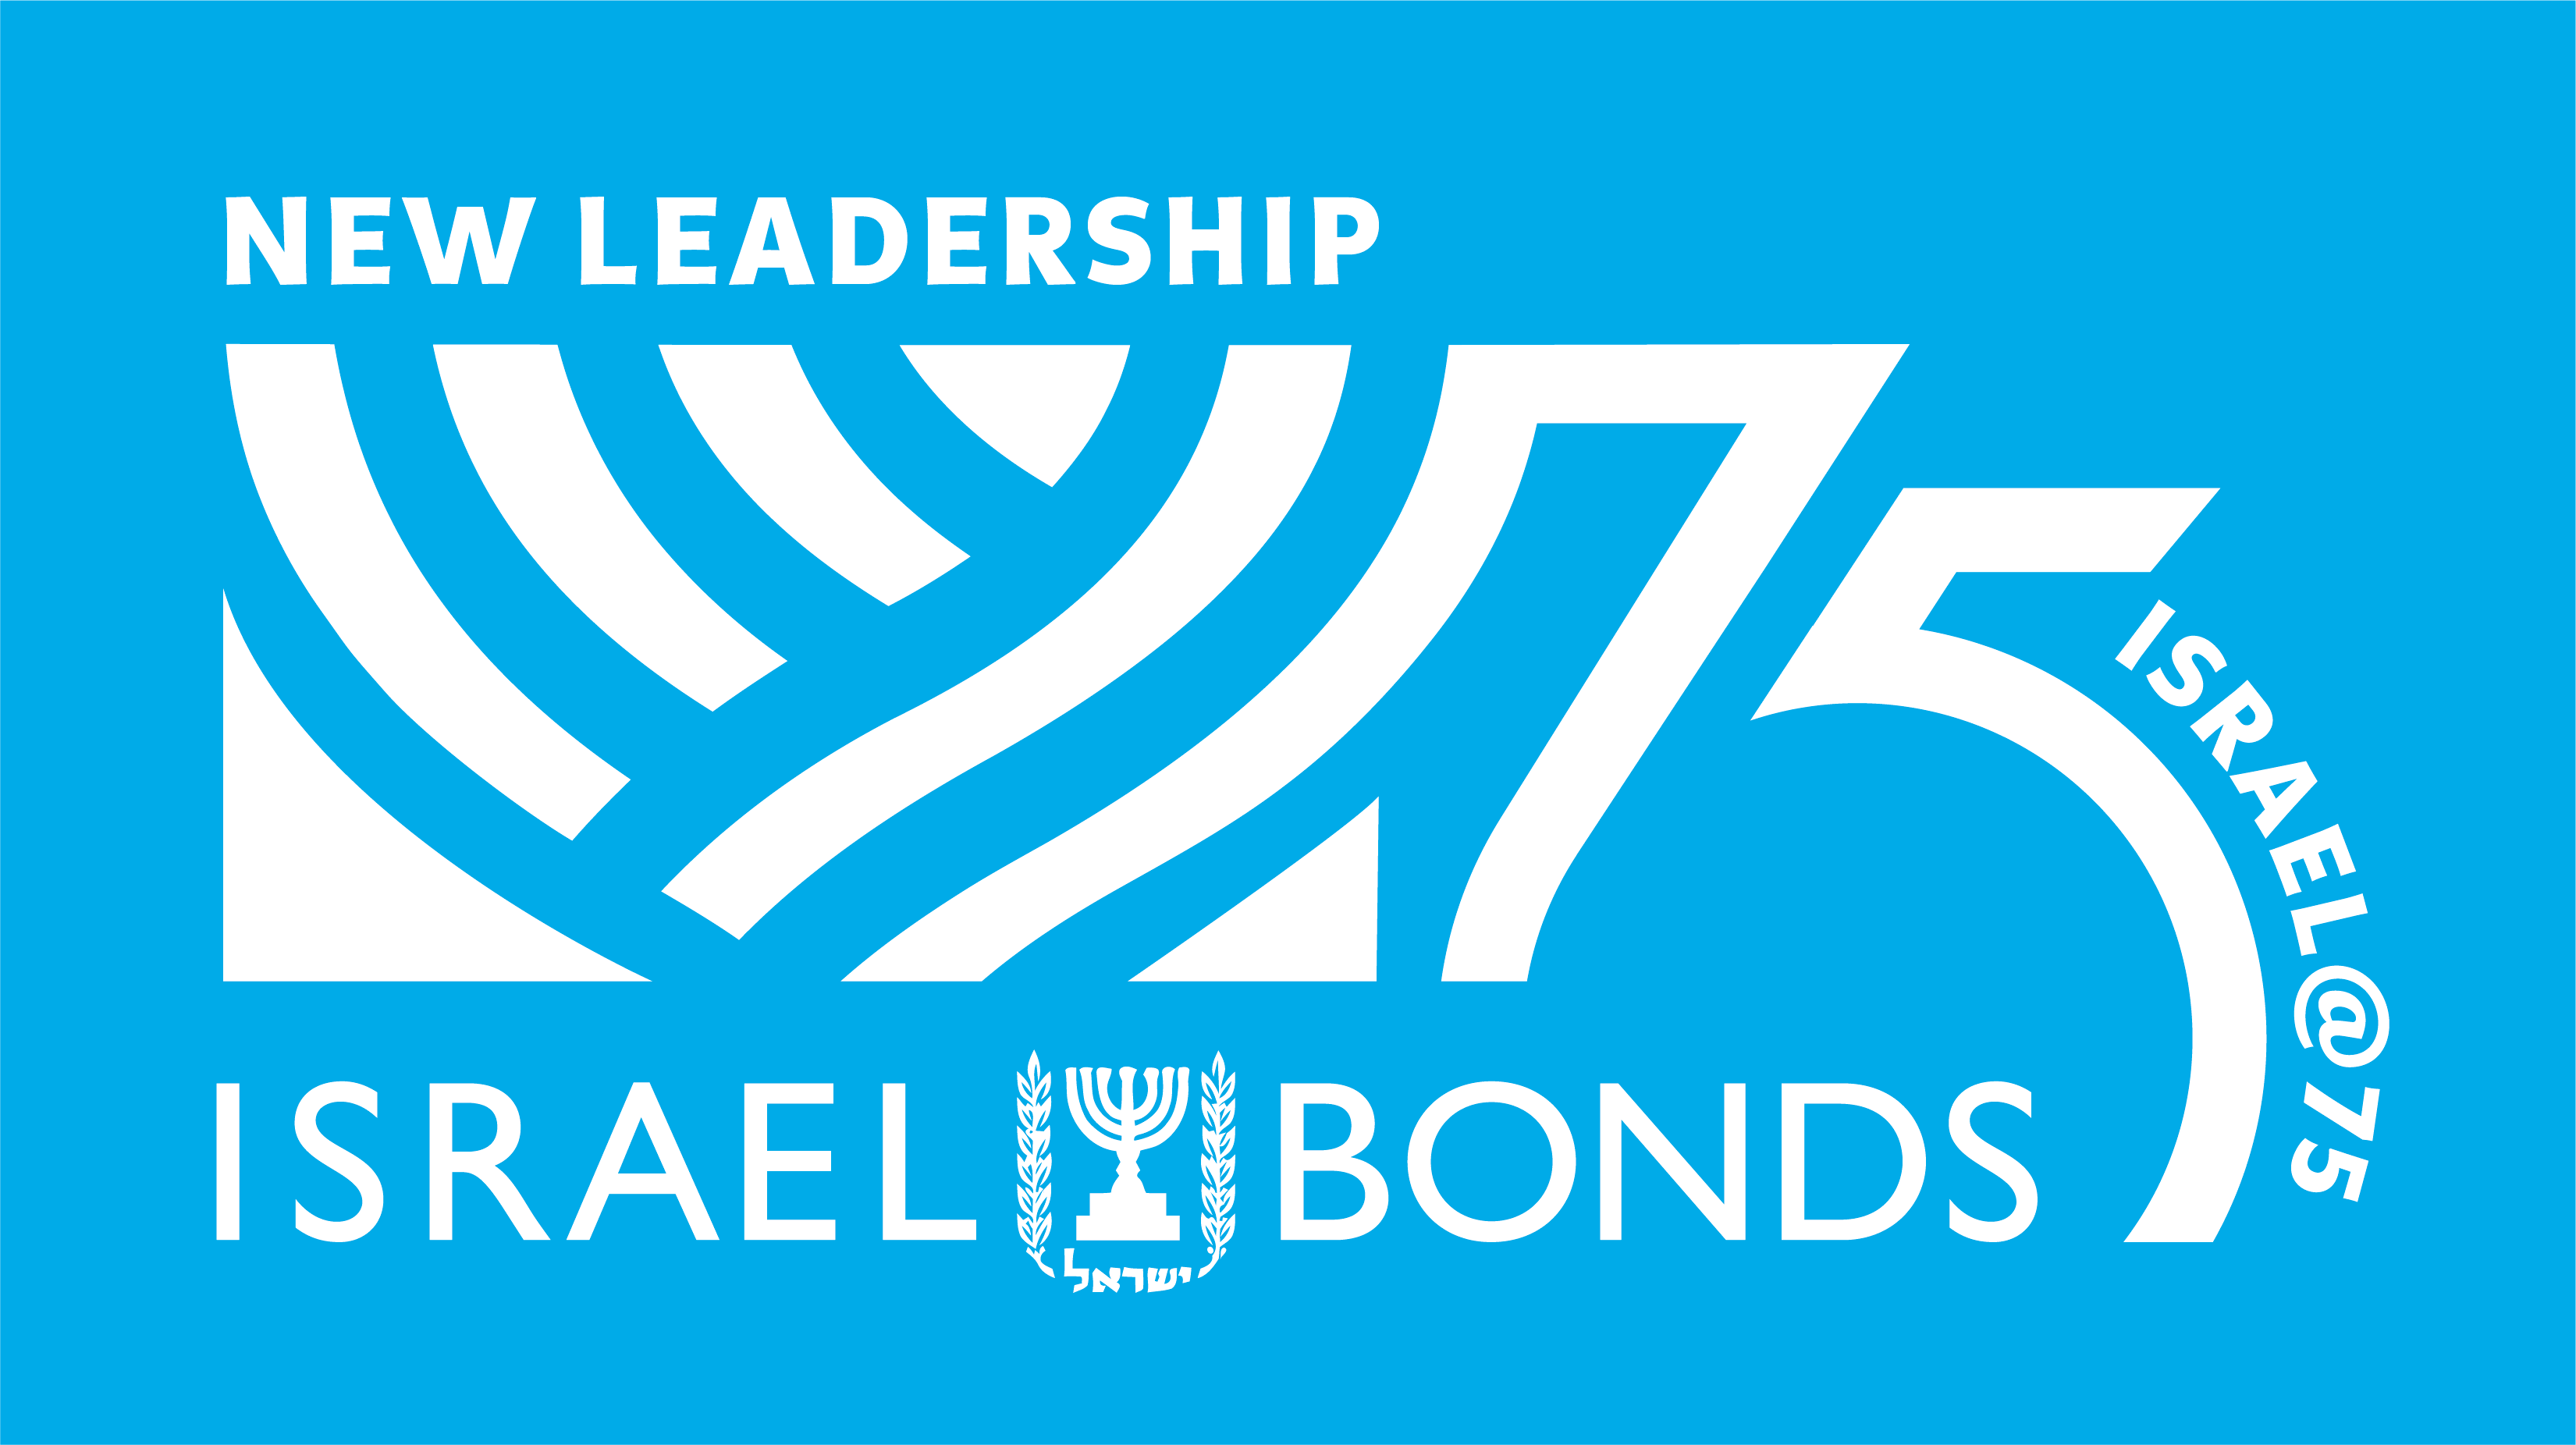 Israel Bonds New Leadership 75th Anniversary logo